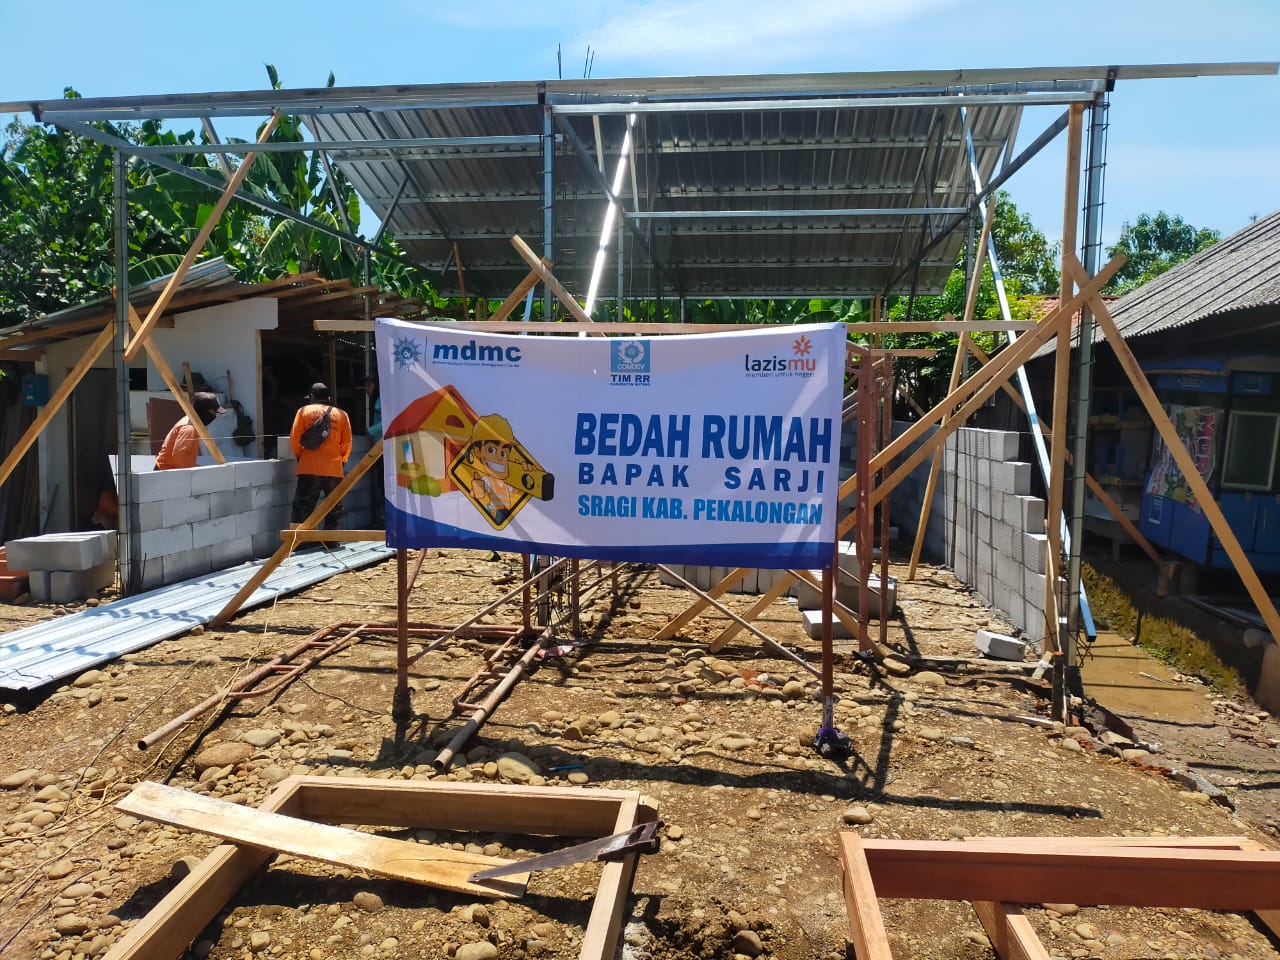 Lazismu Kabupaten Pekalongan Bedah Rumah Marbot Masjid At Taqwa Sragi